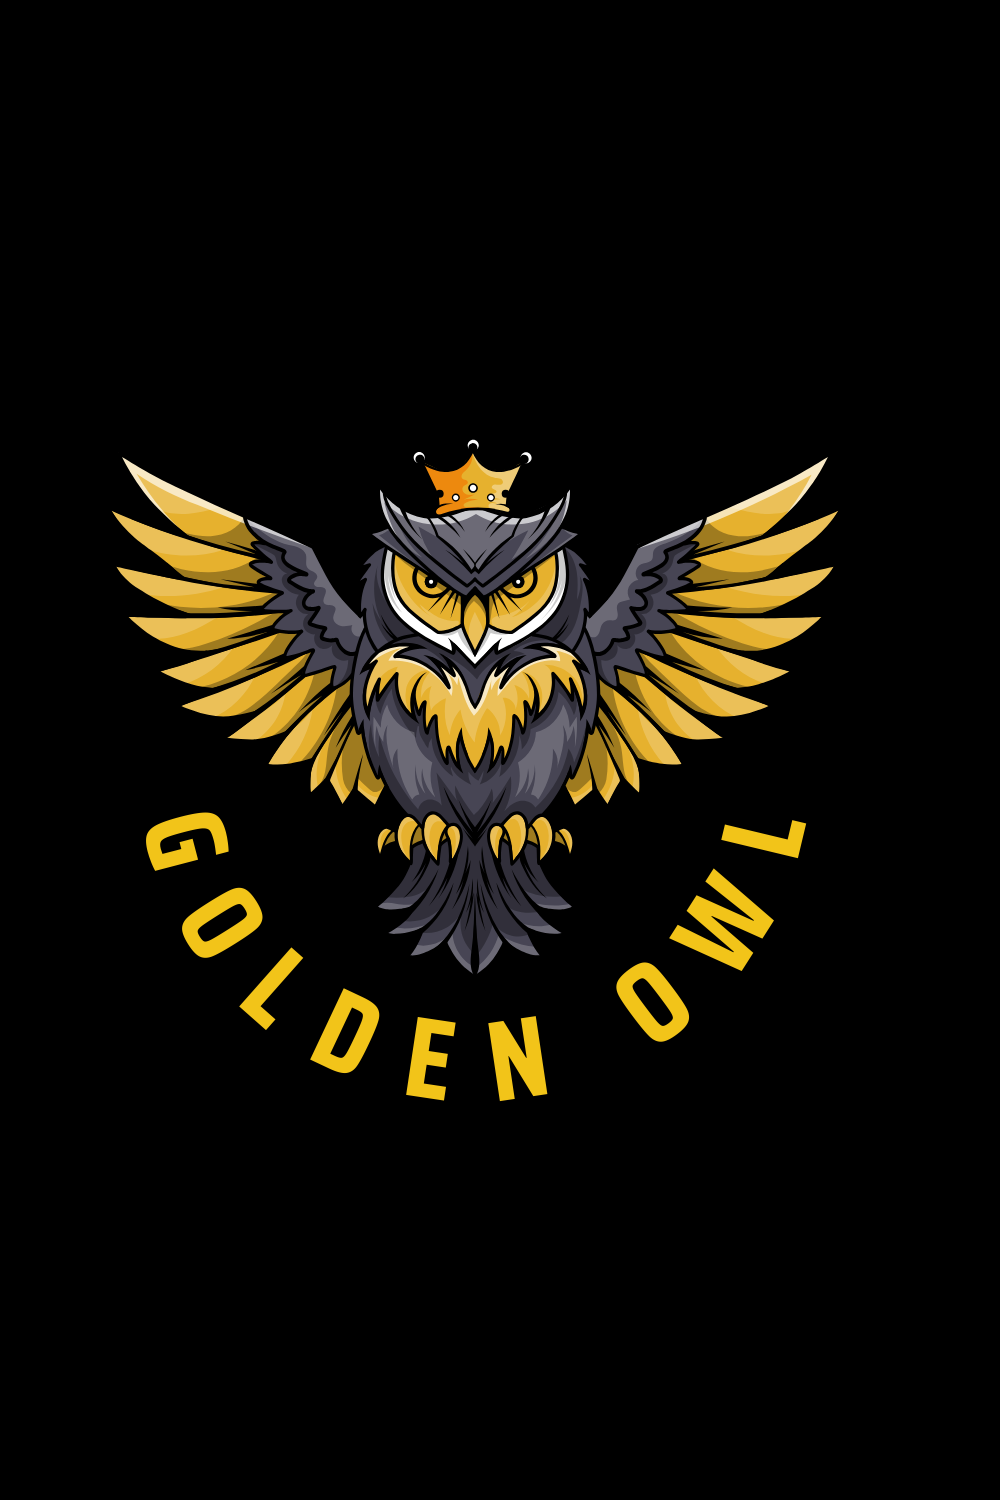 king bird logos pinterest preview image.